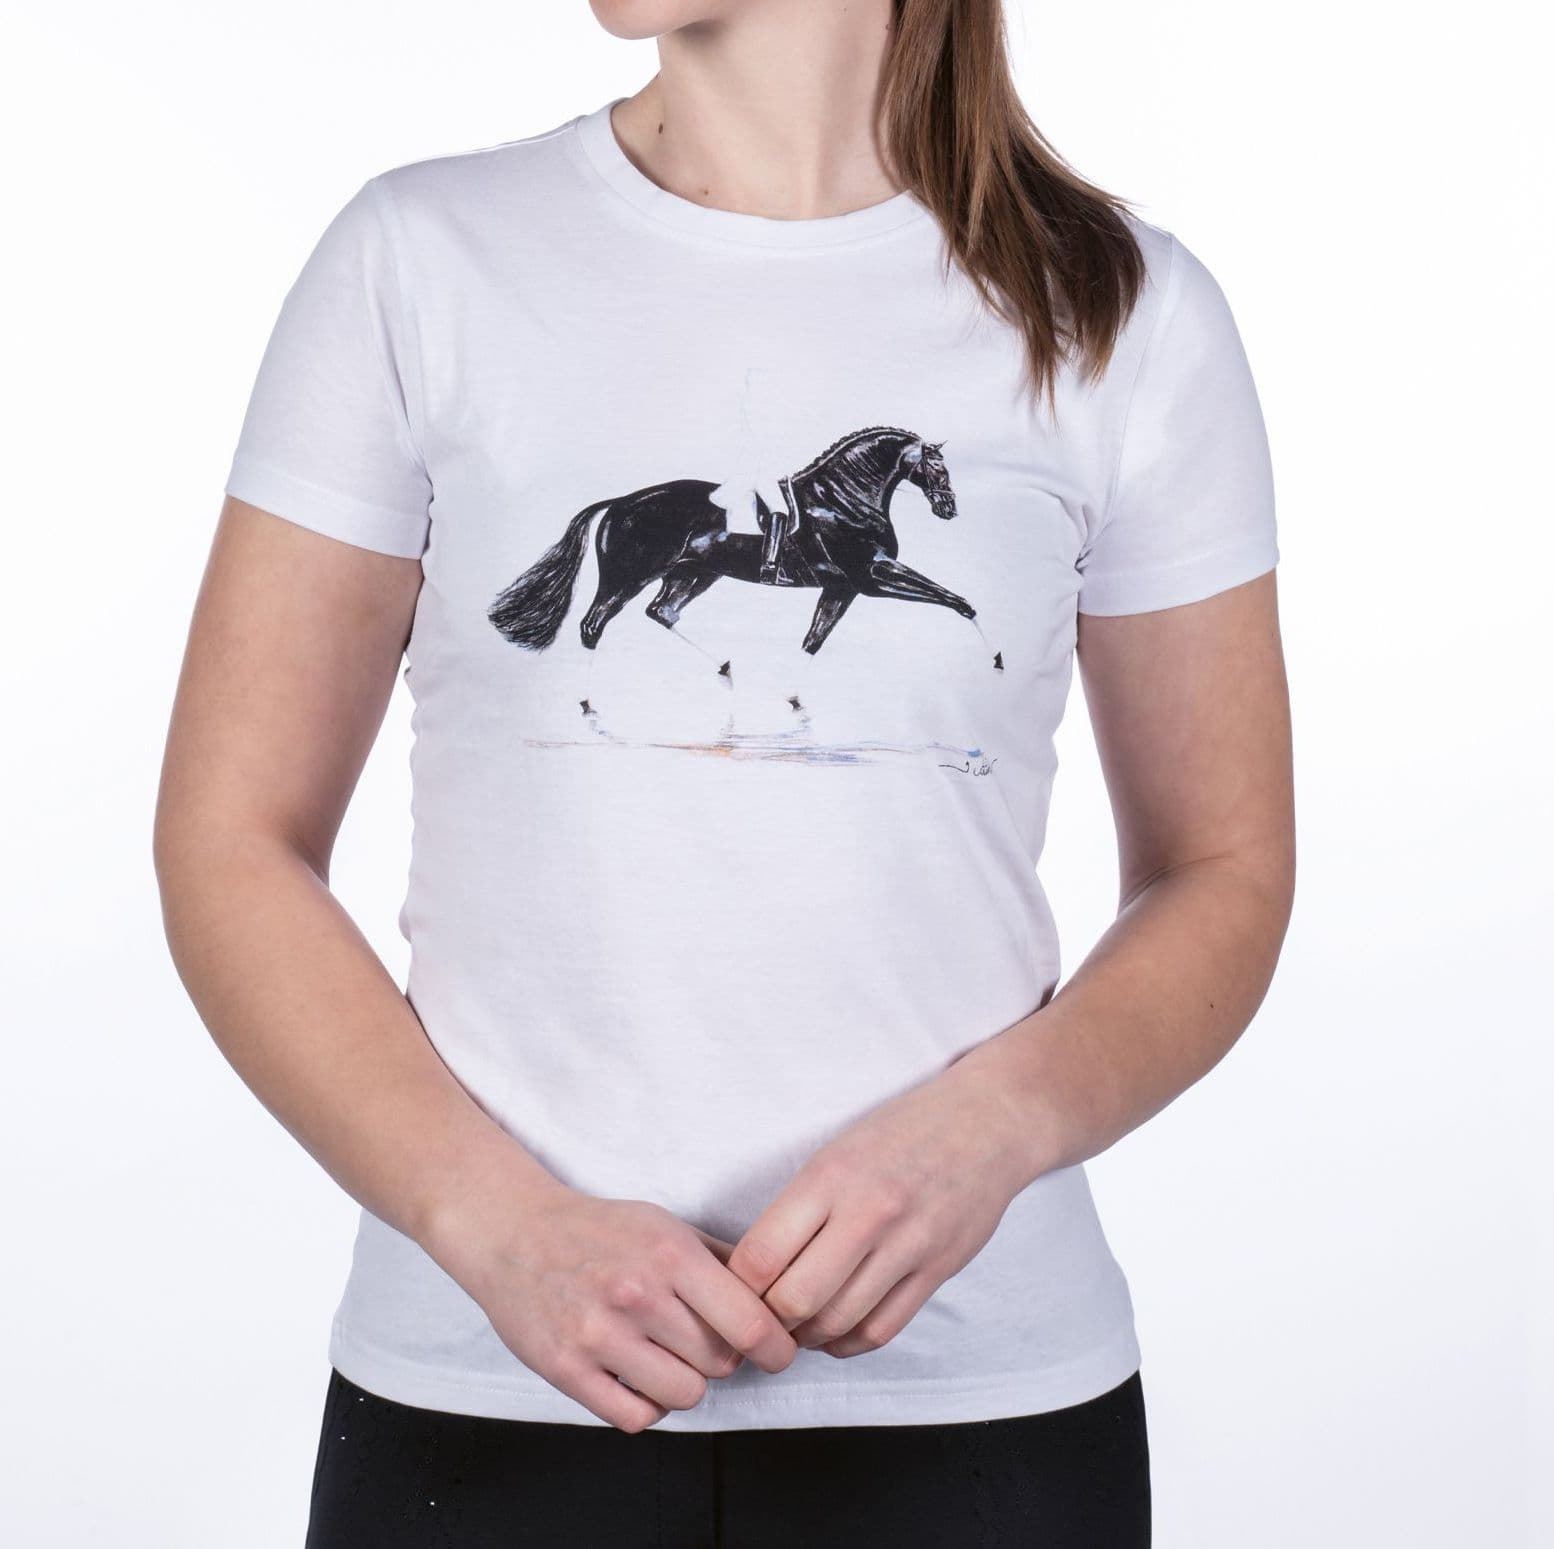 Camiseta HKM Sports Equipment caballo doma - Imagen 1